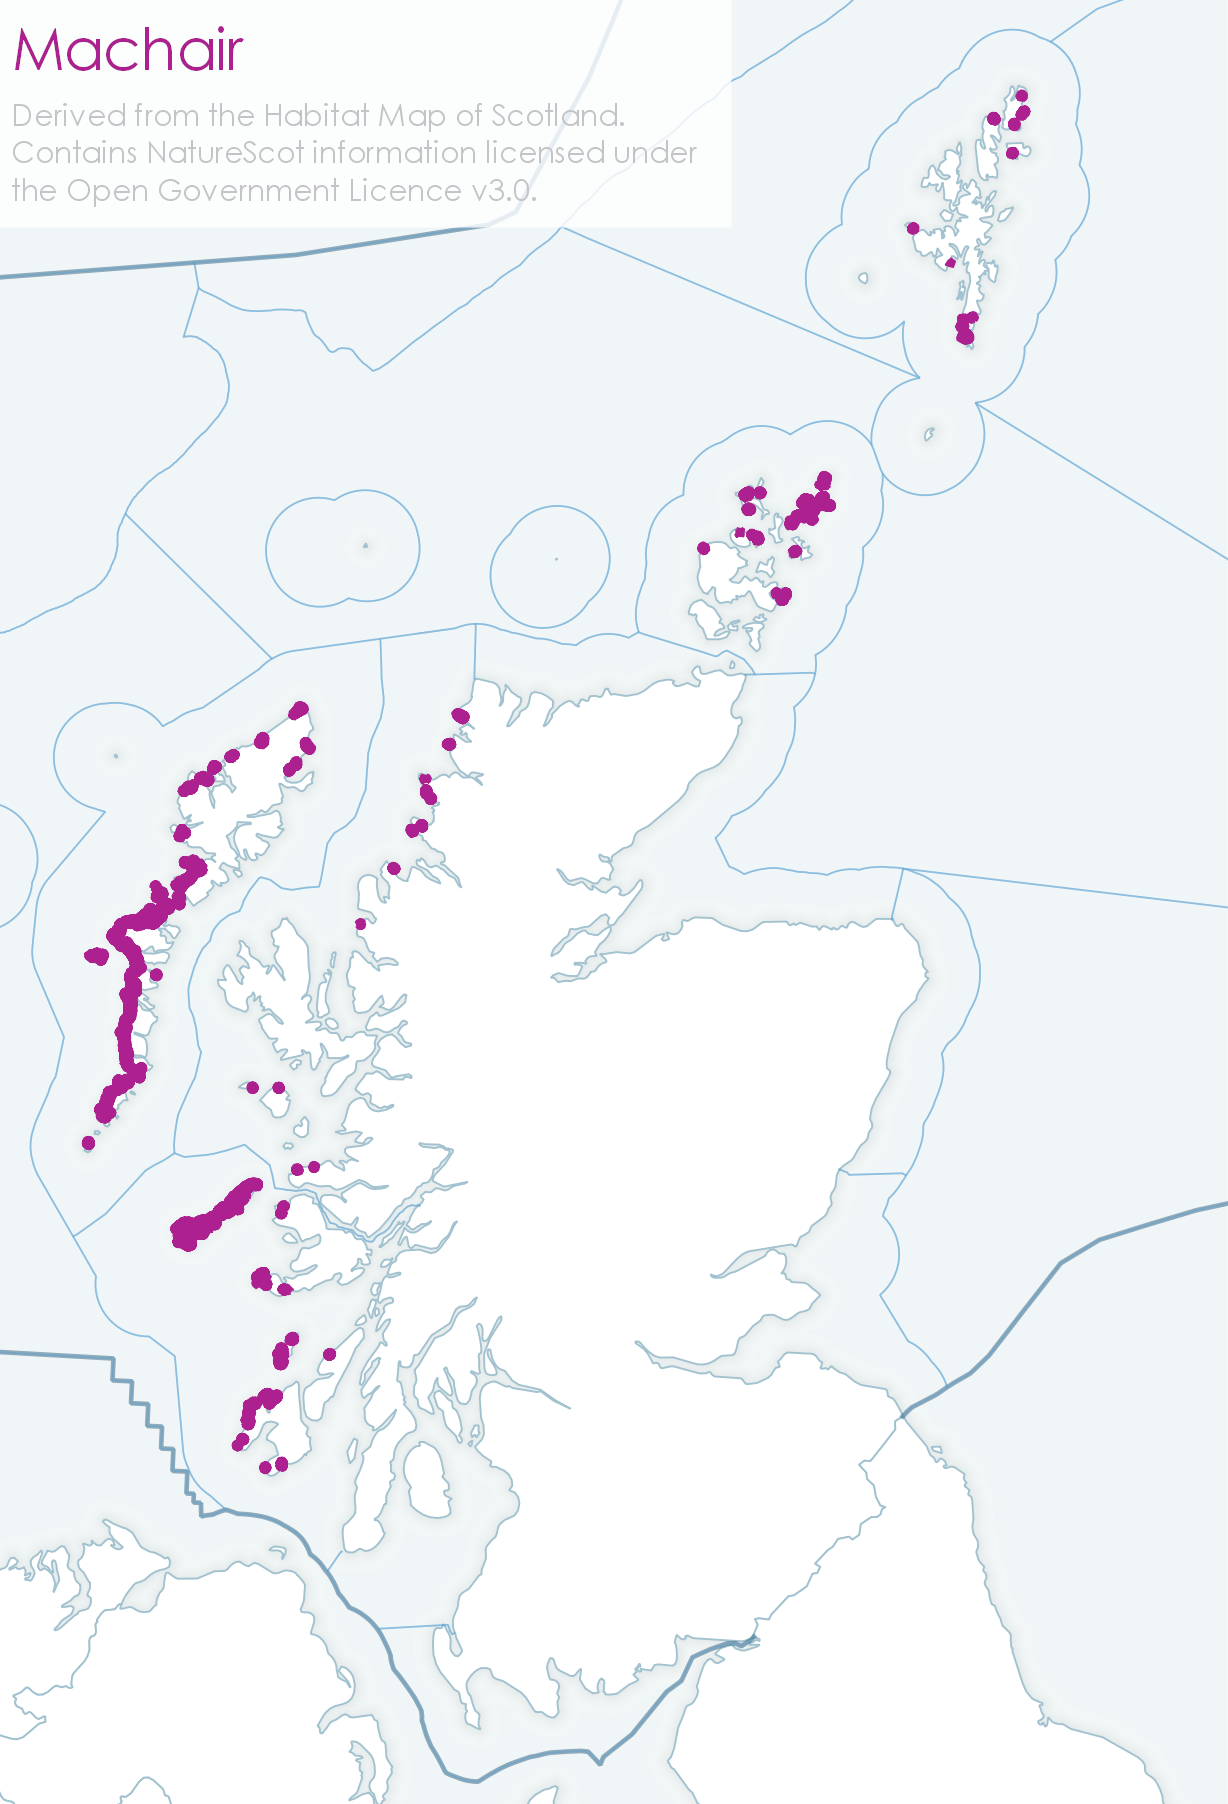 Location of Scotland's machair